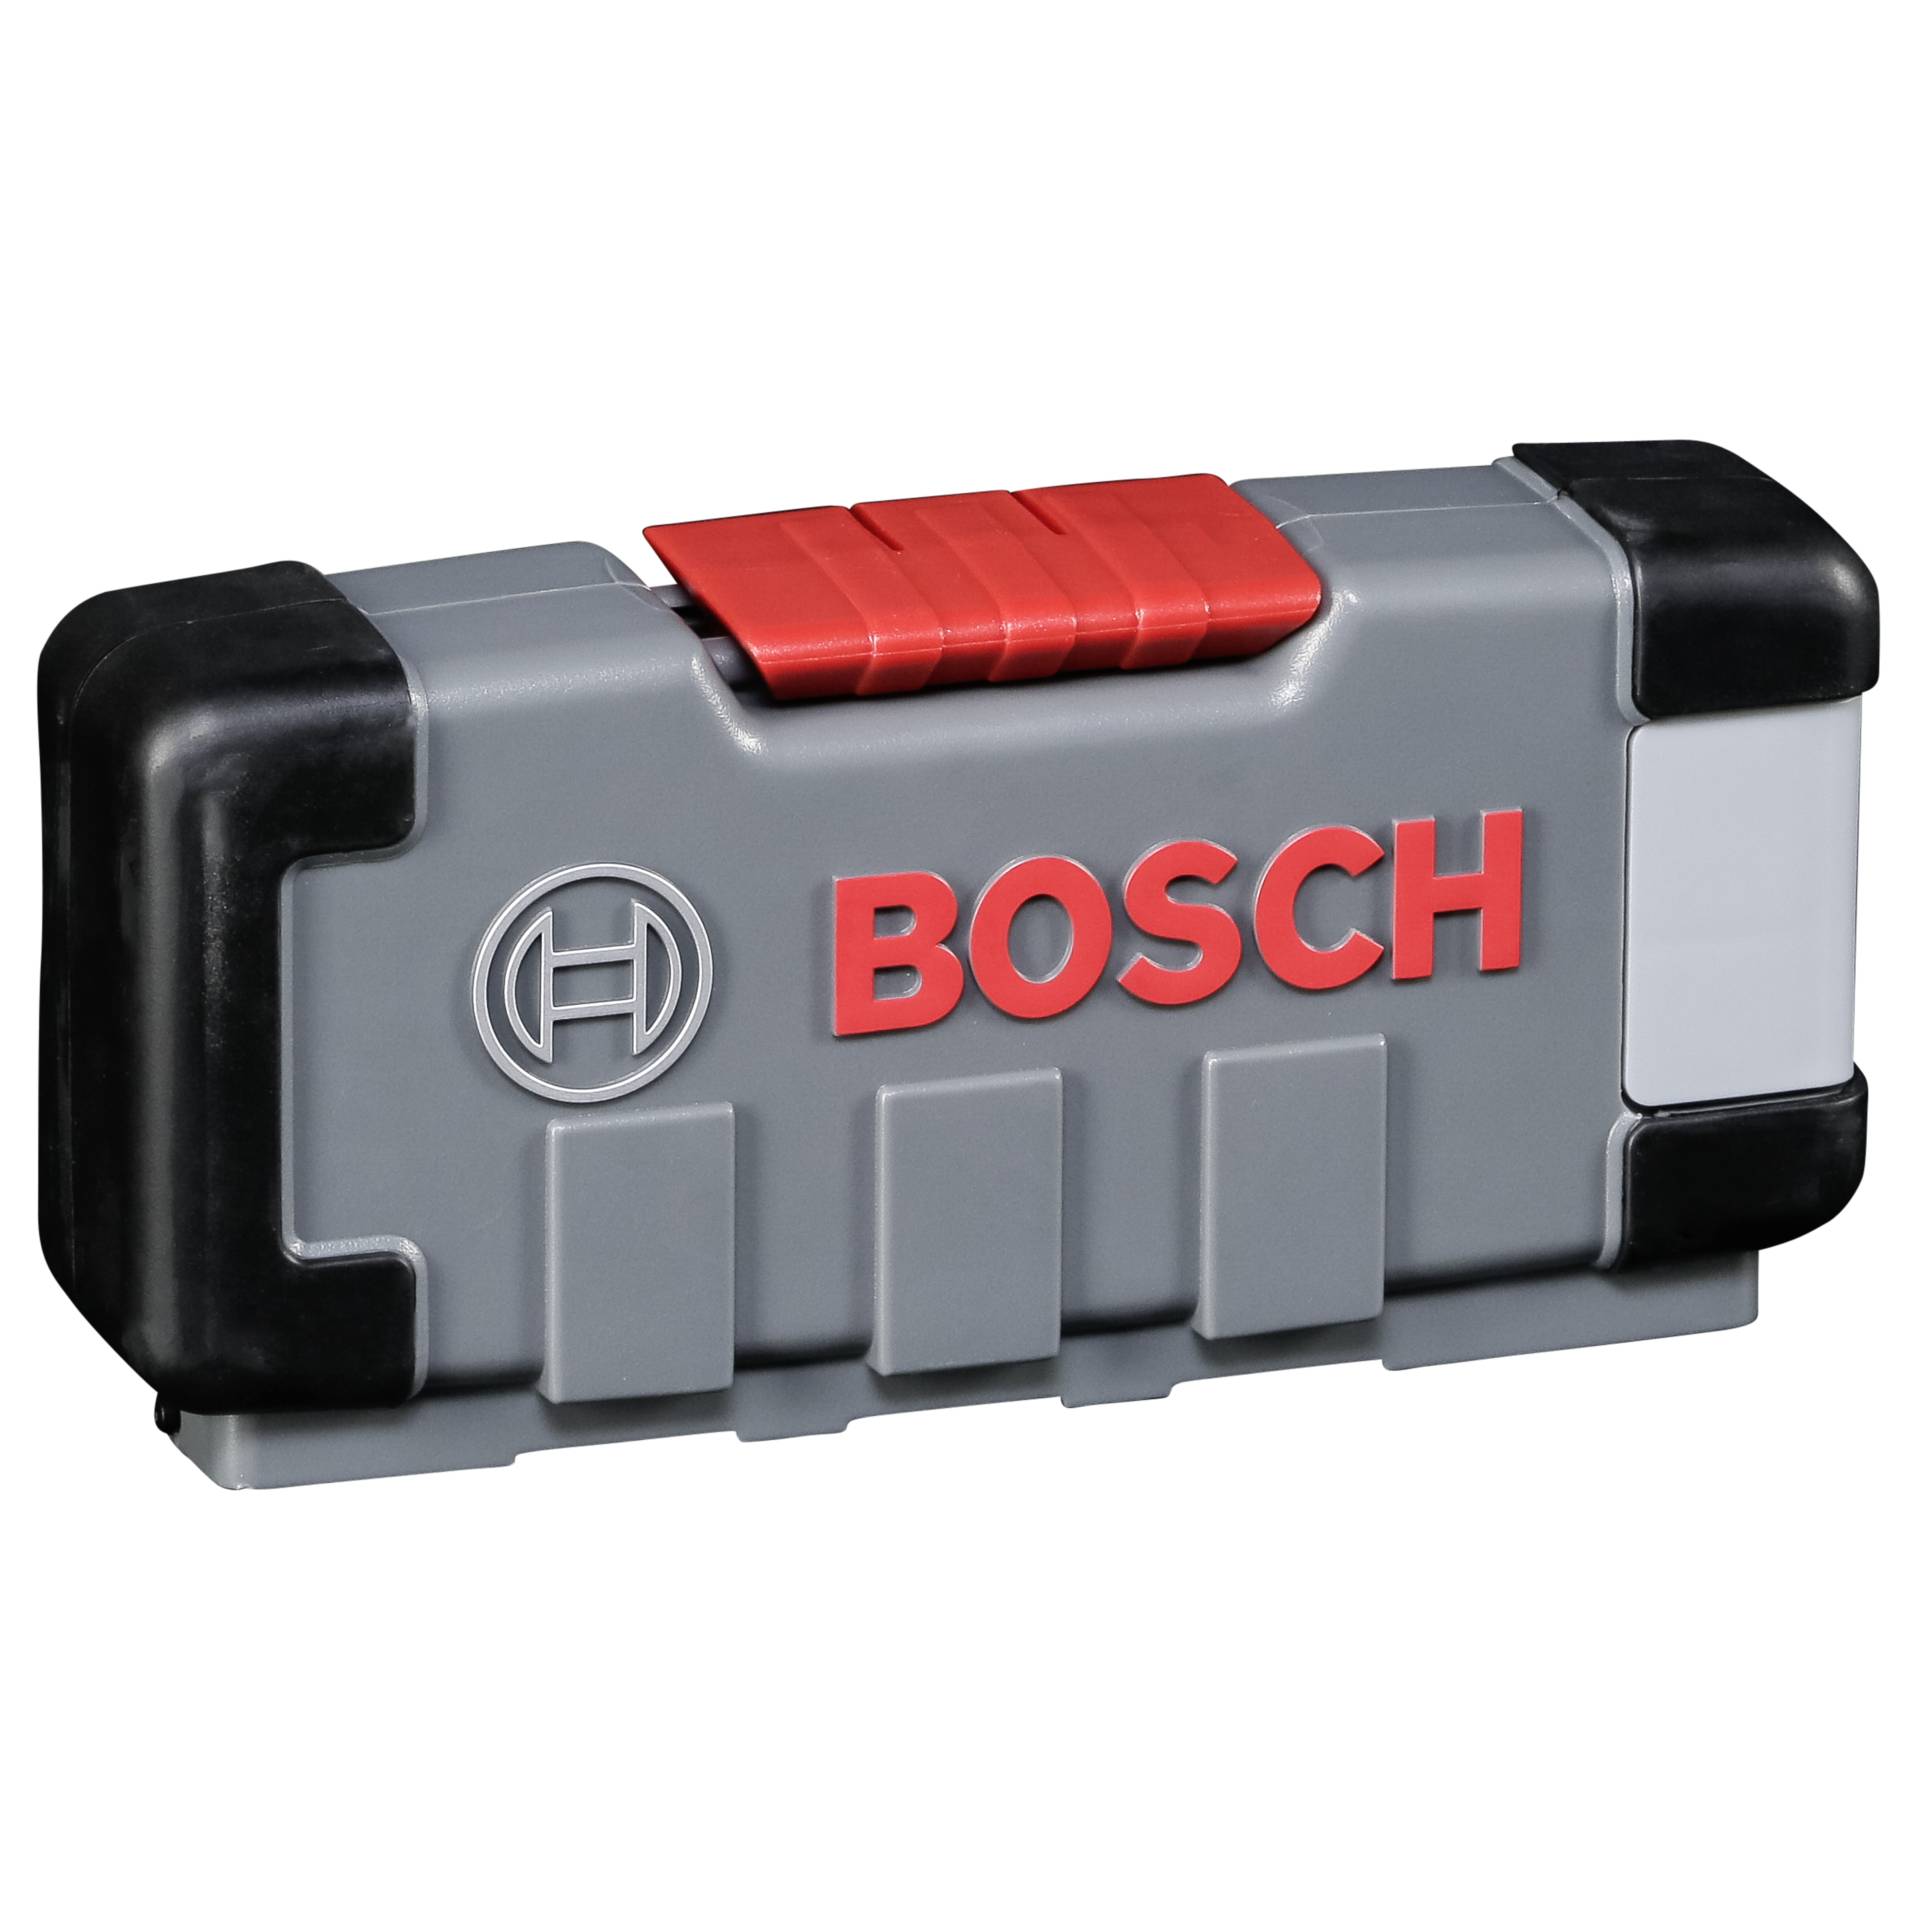 Bosch 30tlg Stichsägeblatt Set Holz günstig bei